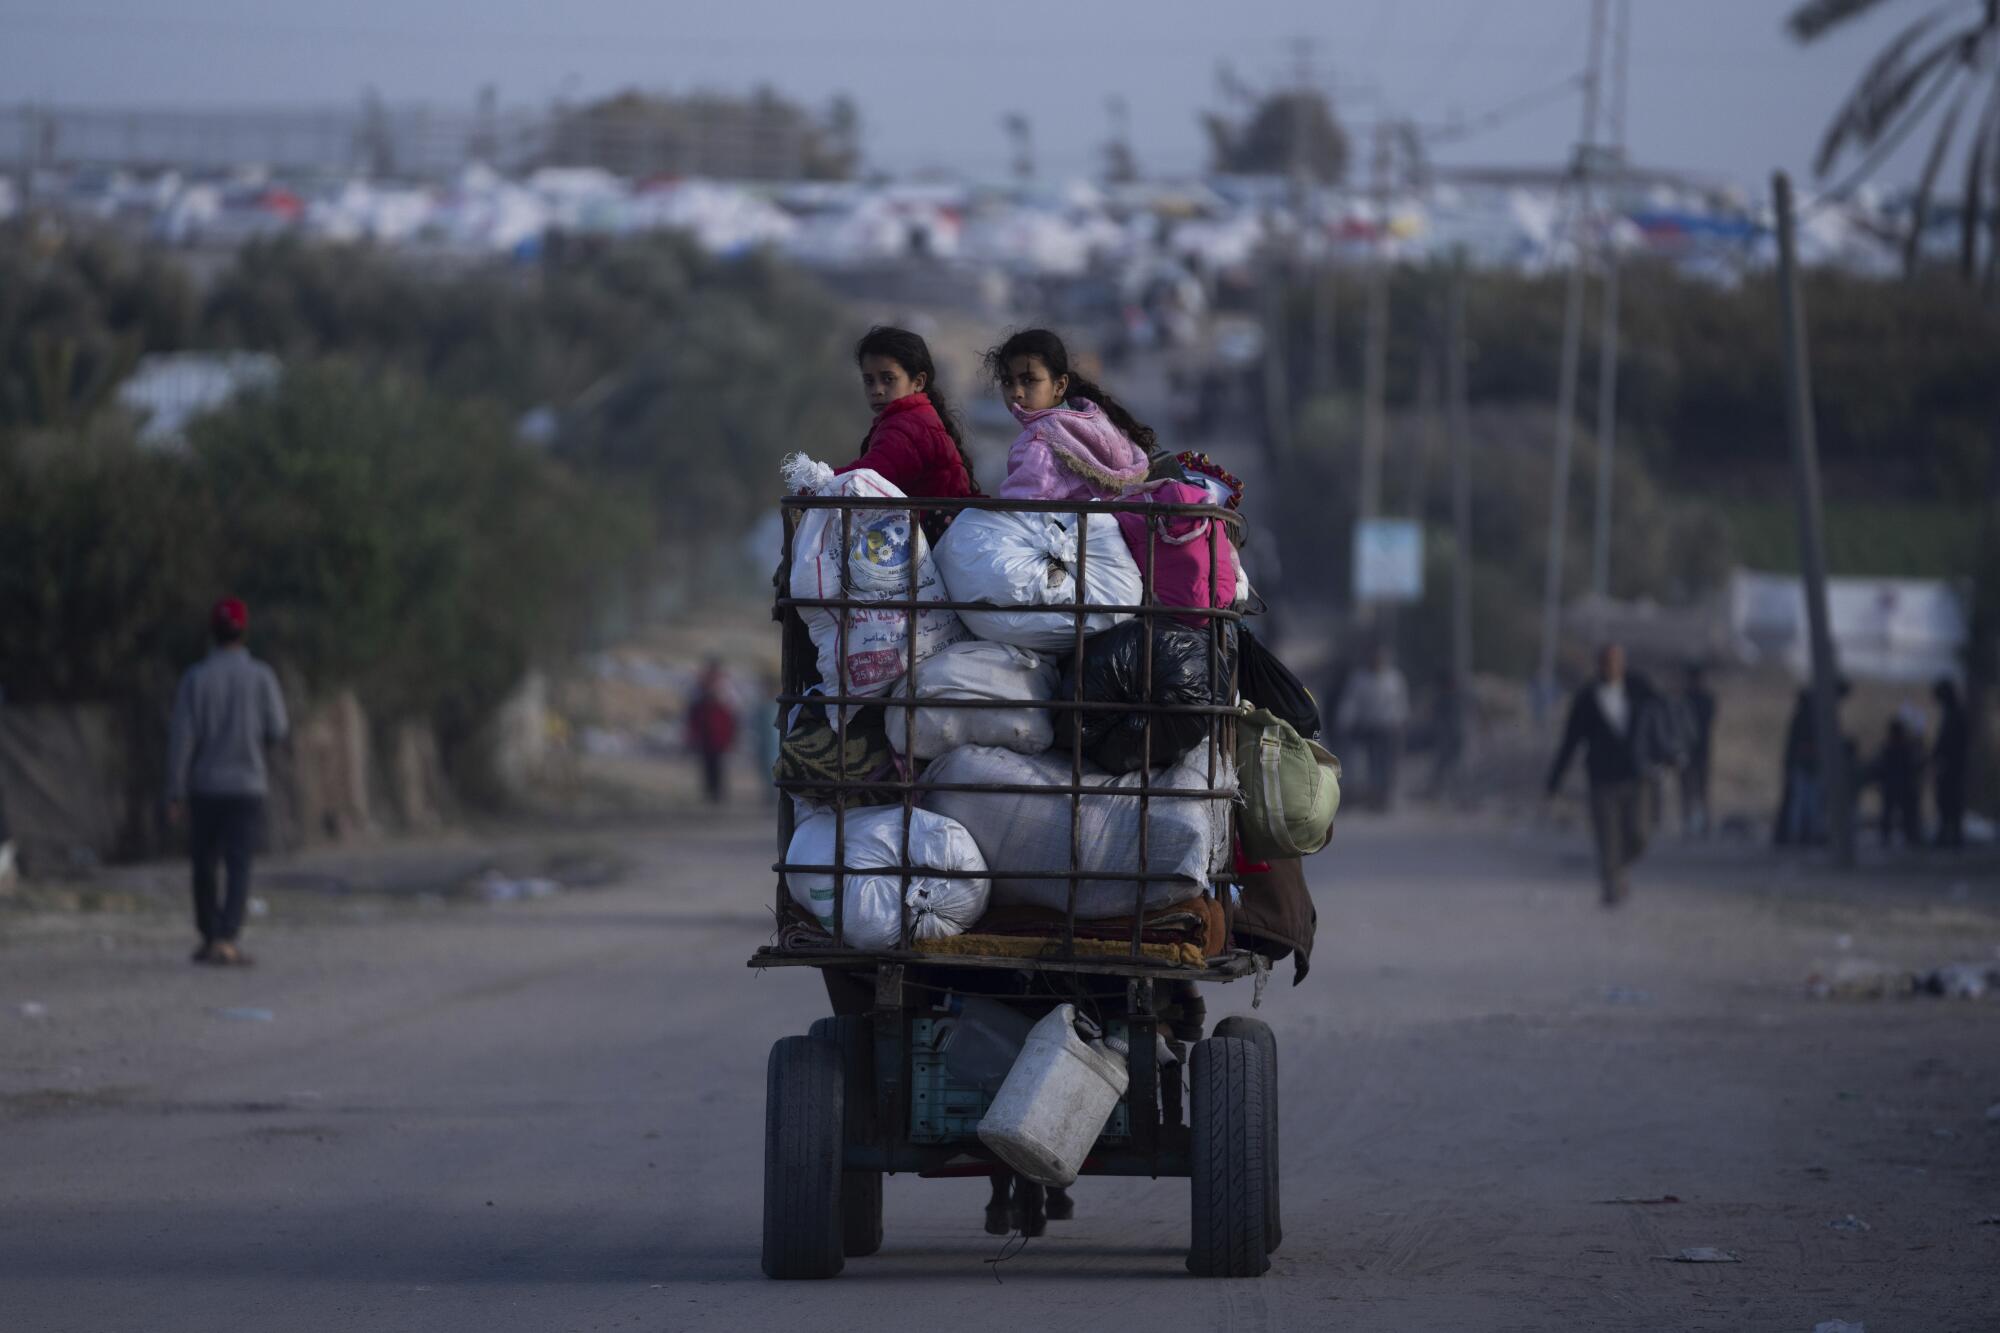 Gazans fleeing Khan Yunis on laden vehicle